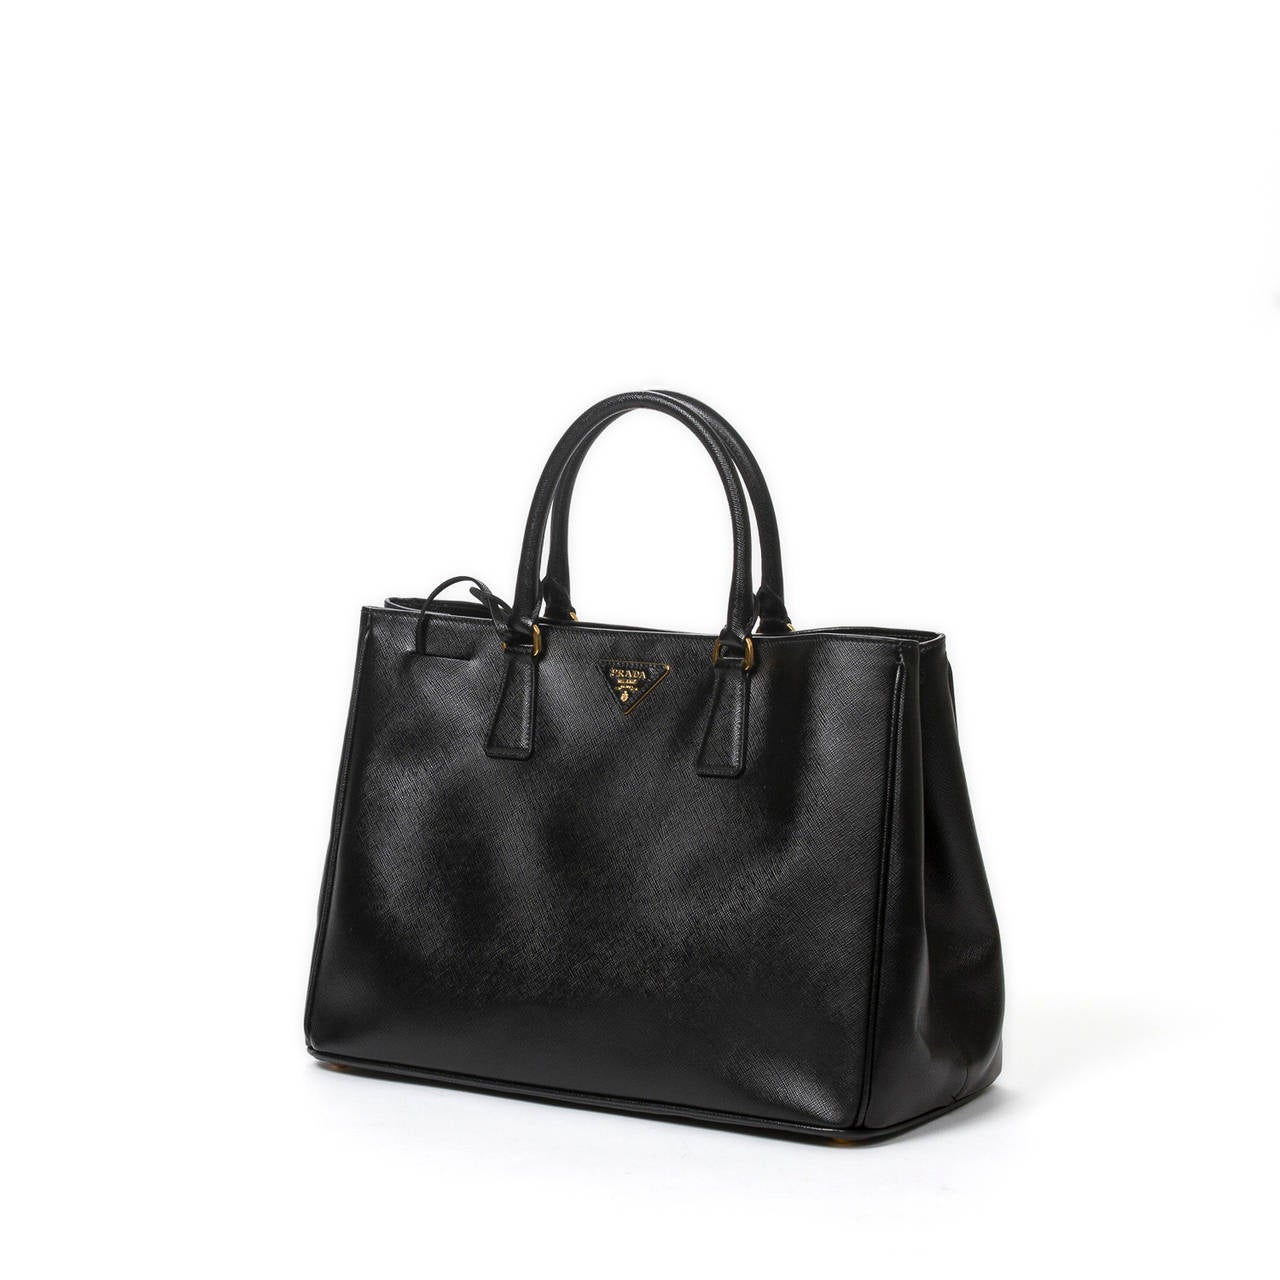 Prada Saffiano Lux Handbag Black at 1stdibs  